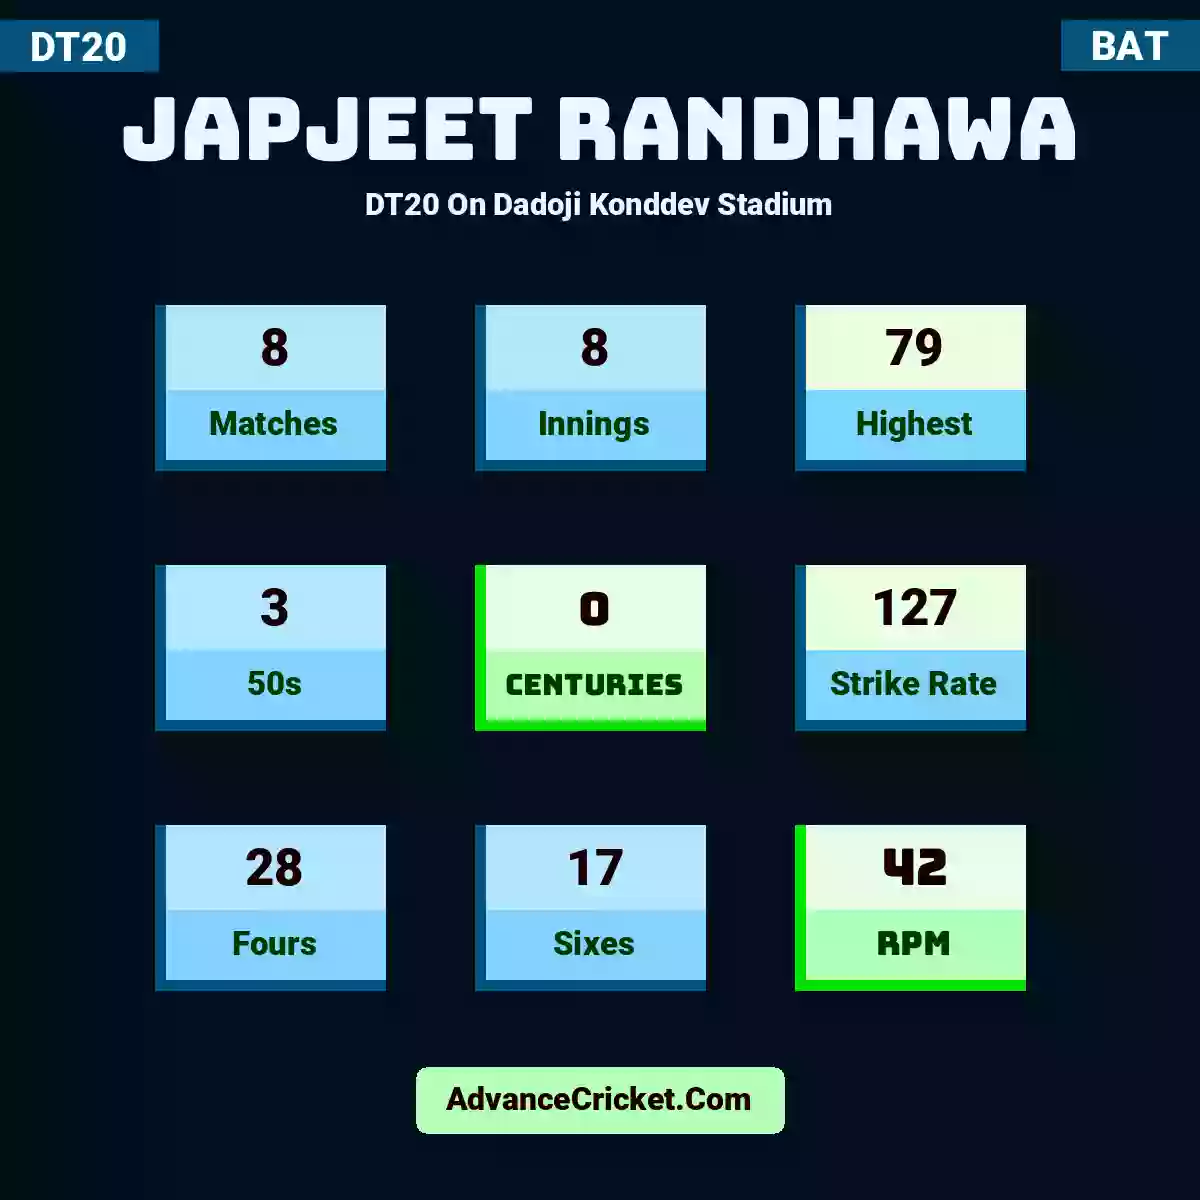 Japjeet Randhawa DT20  On Dadoji Konddev Stadium, Japjeet Randhawa played 8 matches, scored 79 runs as highest, 3 half-centuries, and 0 centuries, with a strike rate of 127. J.Randhawa hit 28 fours and 17 sixes, with an RPM of 42.